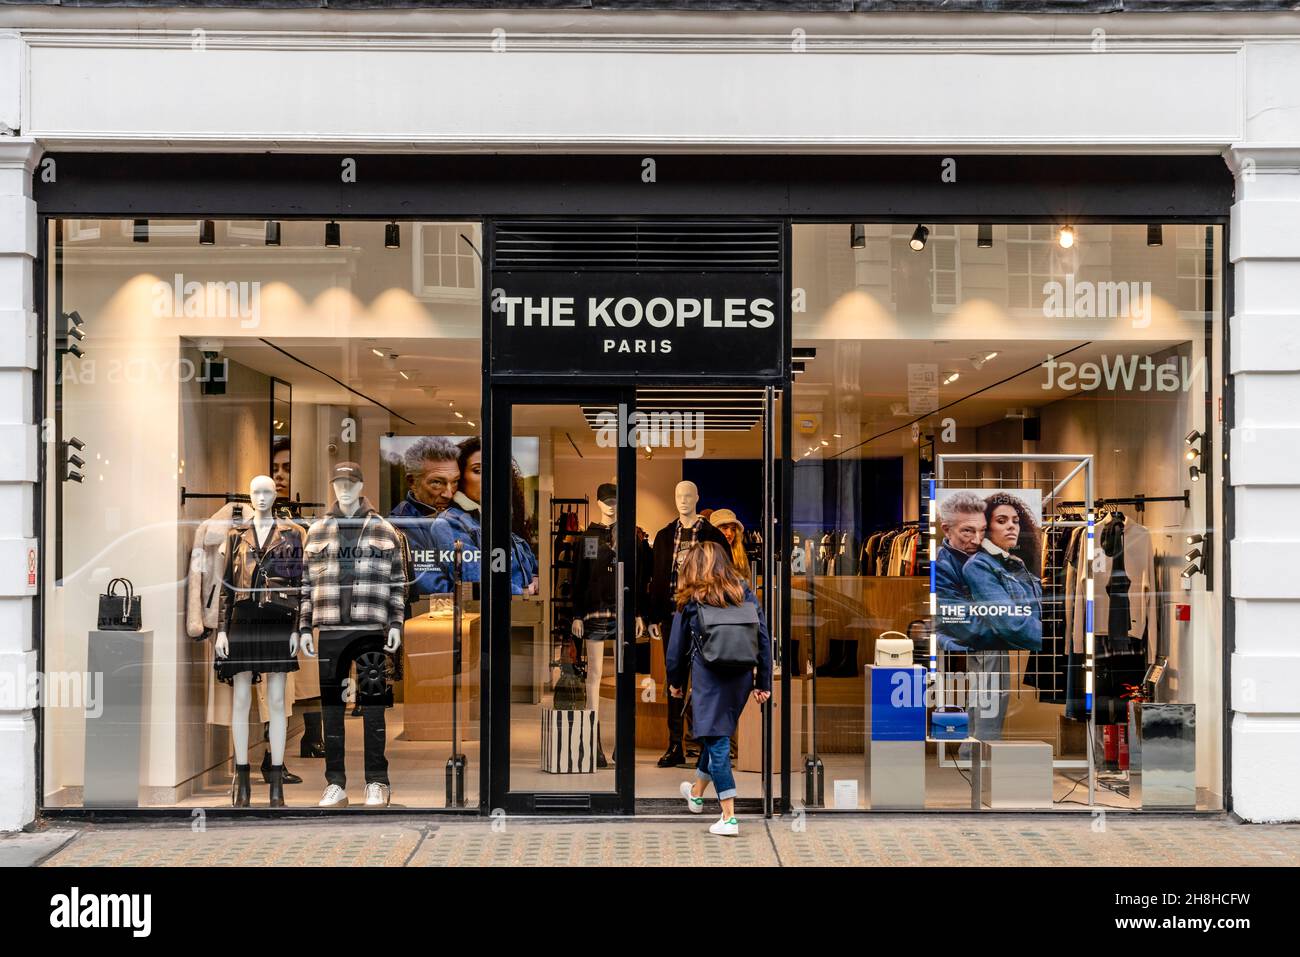 The Kooples Clothing Store, Marylebone High Street, London, UK. Stock Photo